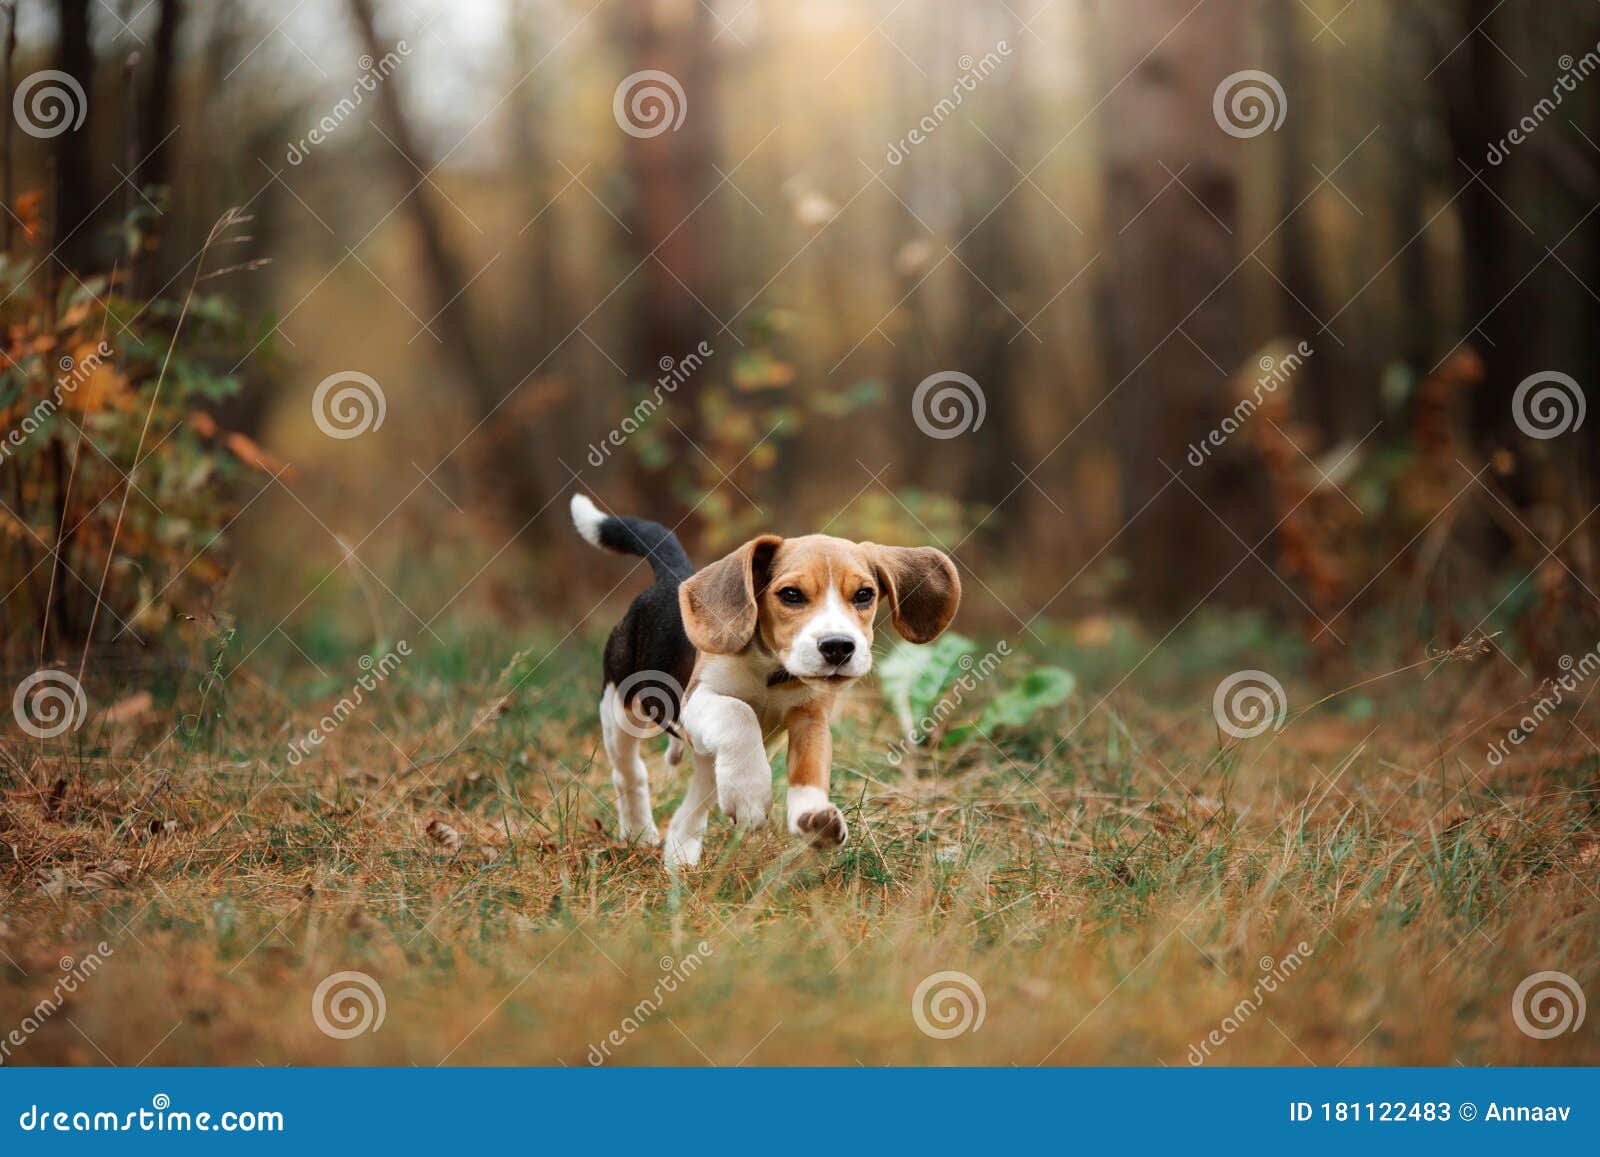 Foran dig Held og lykke Strøm Dog on Nature in the Park.beagle Puppy. Pet for a Walk Stock Image - Image  of dachshund, funny: 181122483